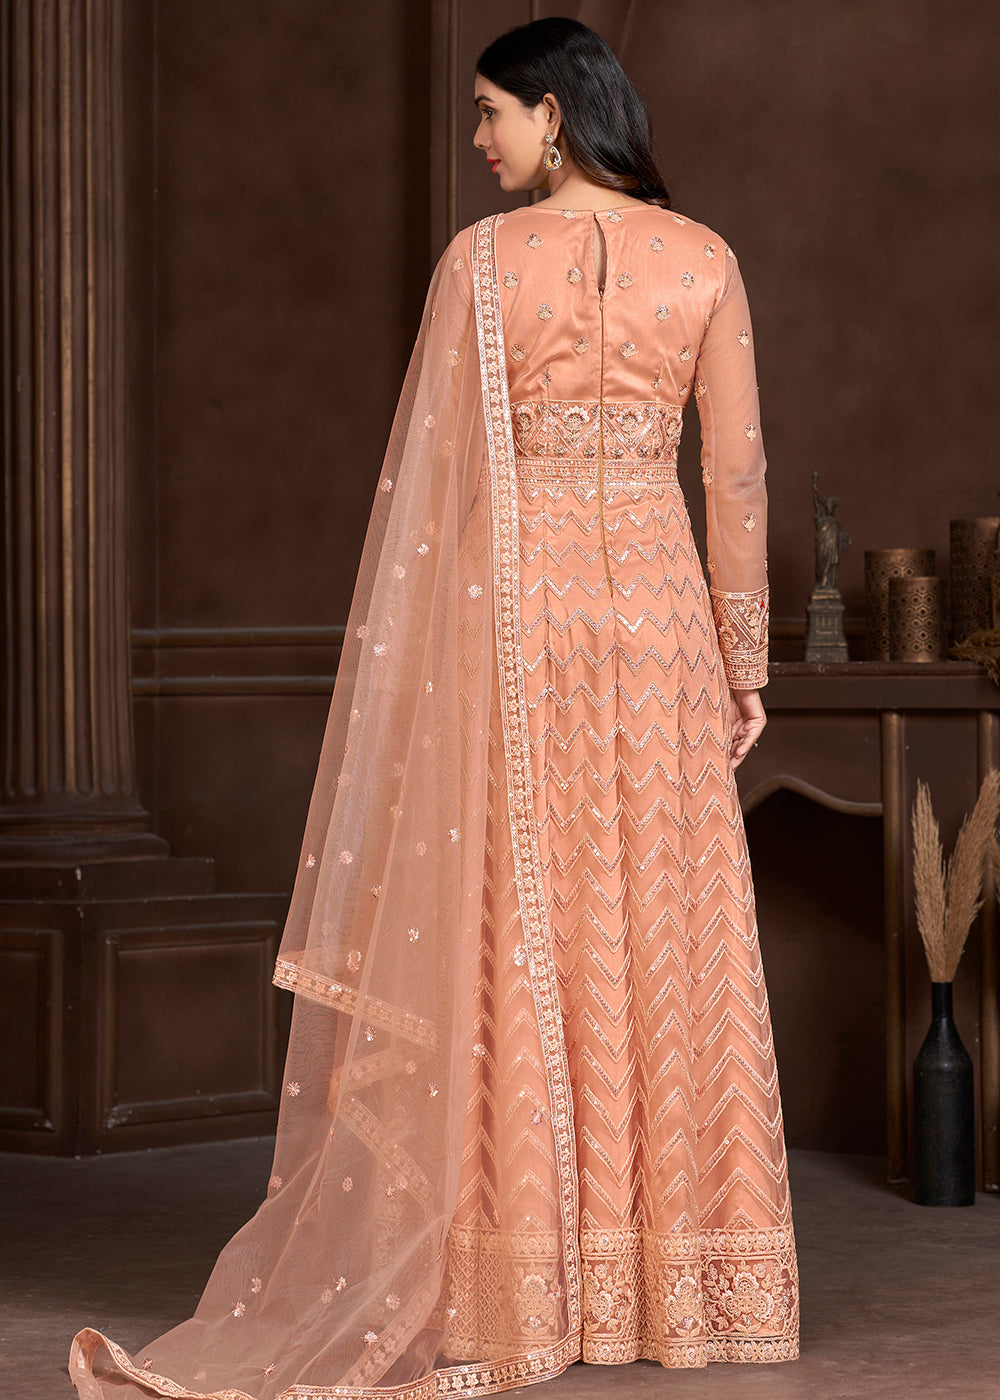 Buy Now Elegant Peach Butterfly Net Designer Anarkali Suit Online in USA, UK, Australia, New Zealand, Canada & Worldwide at Empress Clothing. 